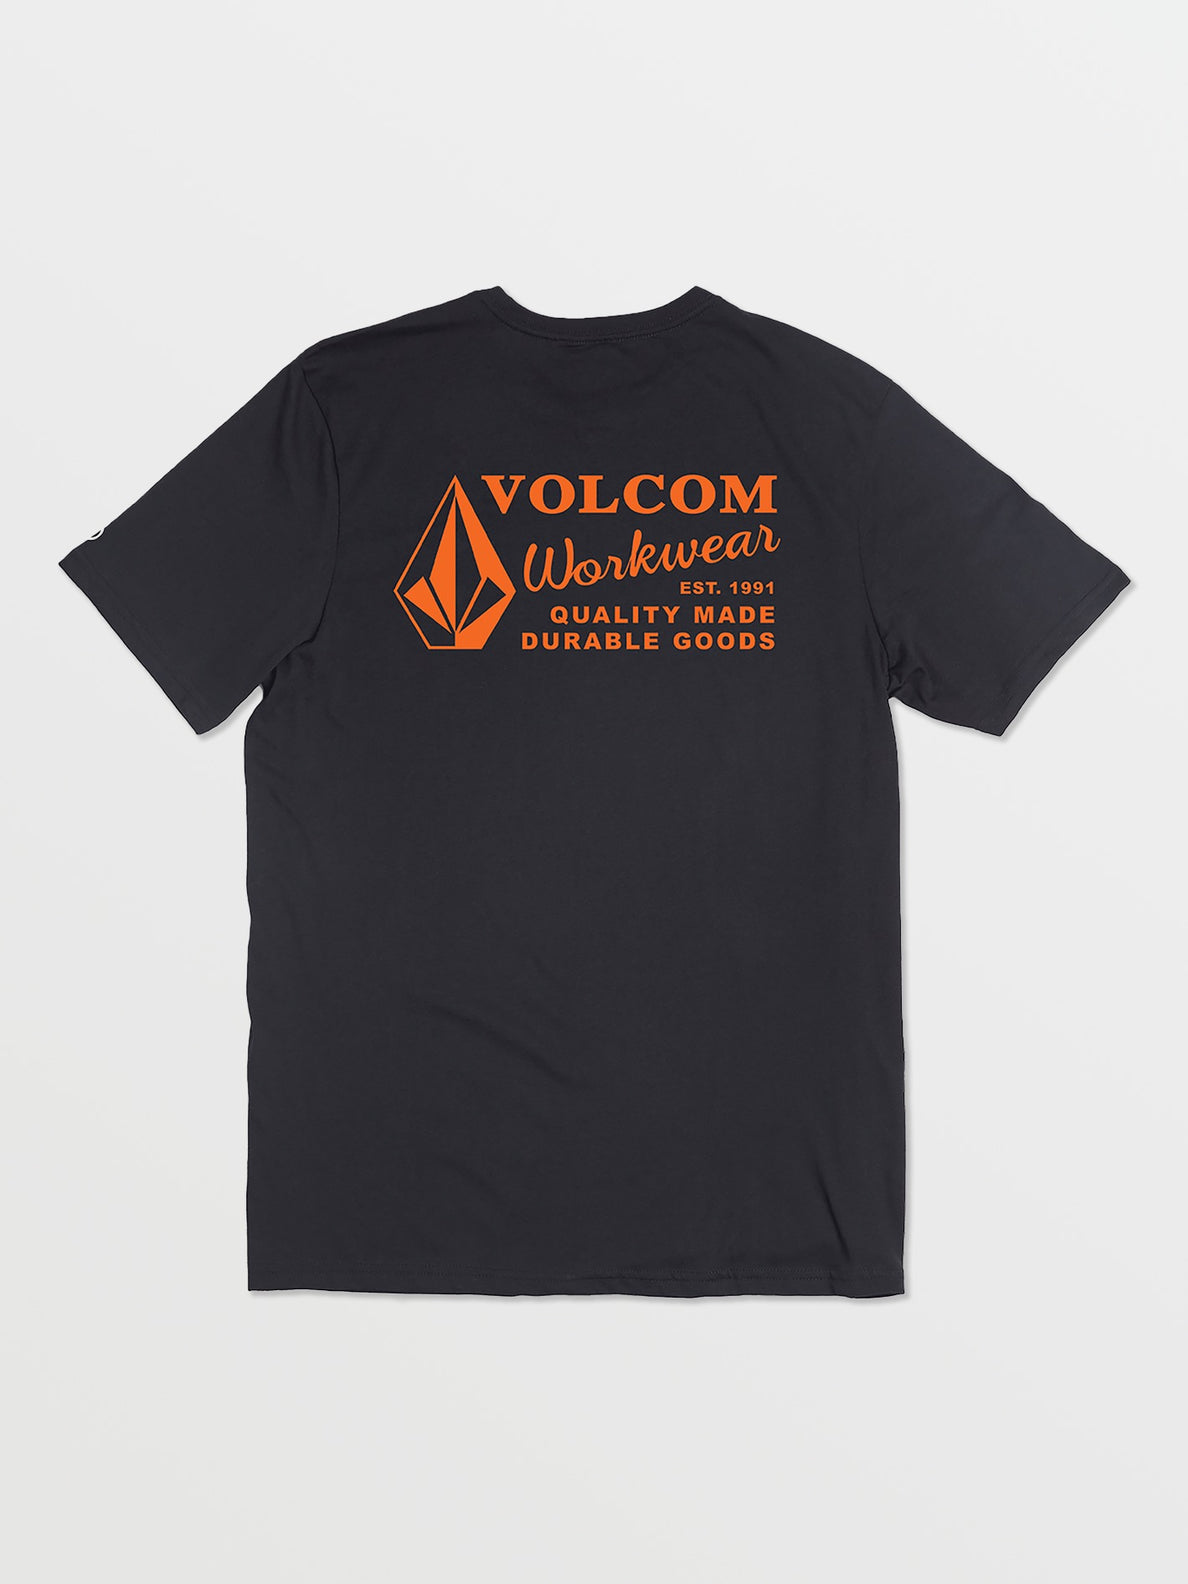 Volcom Workwear Short Sleeve Tee - Black